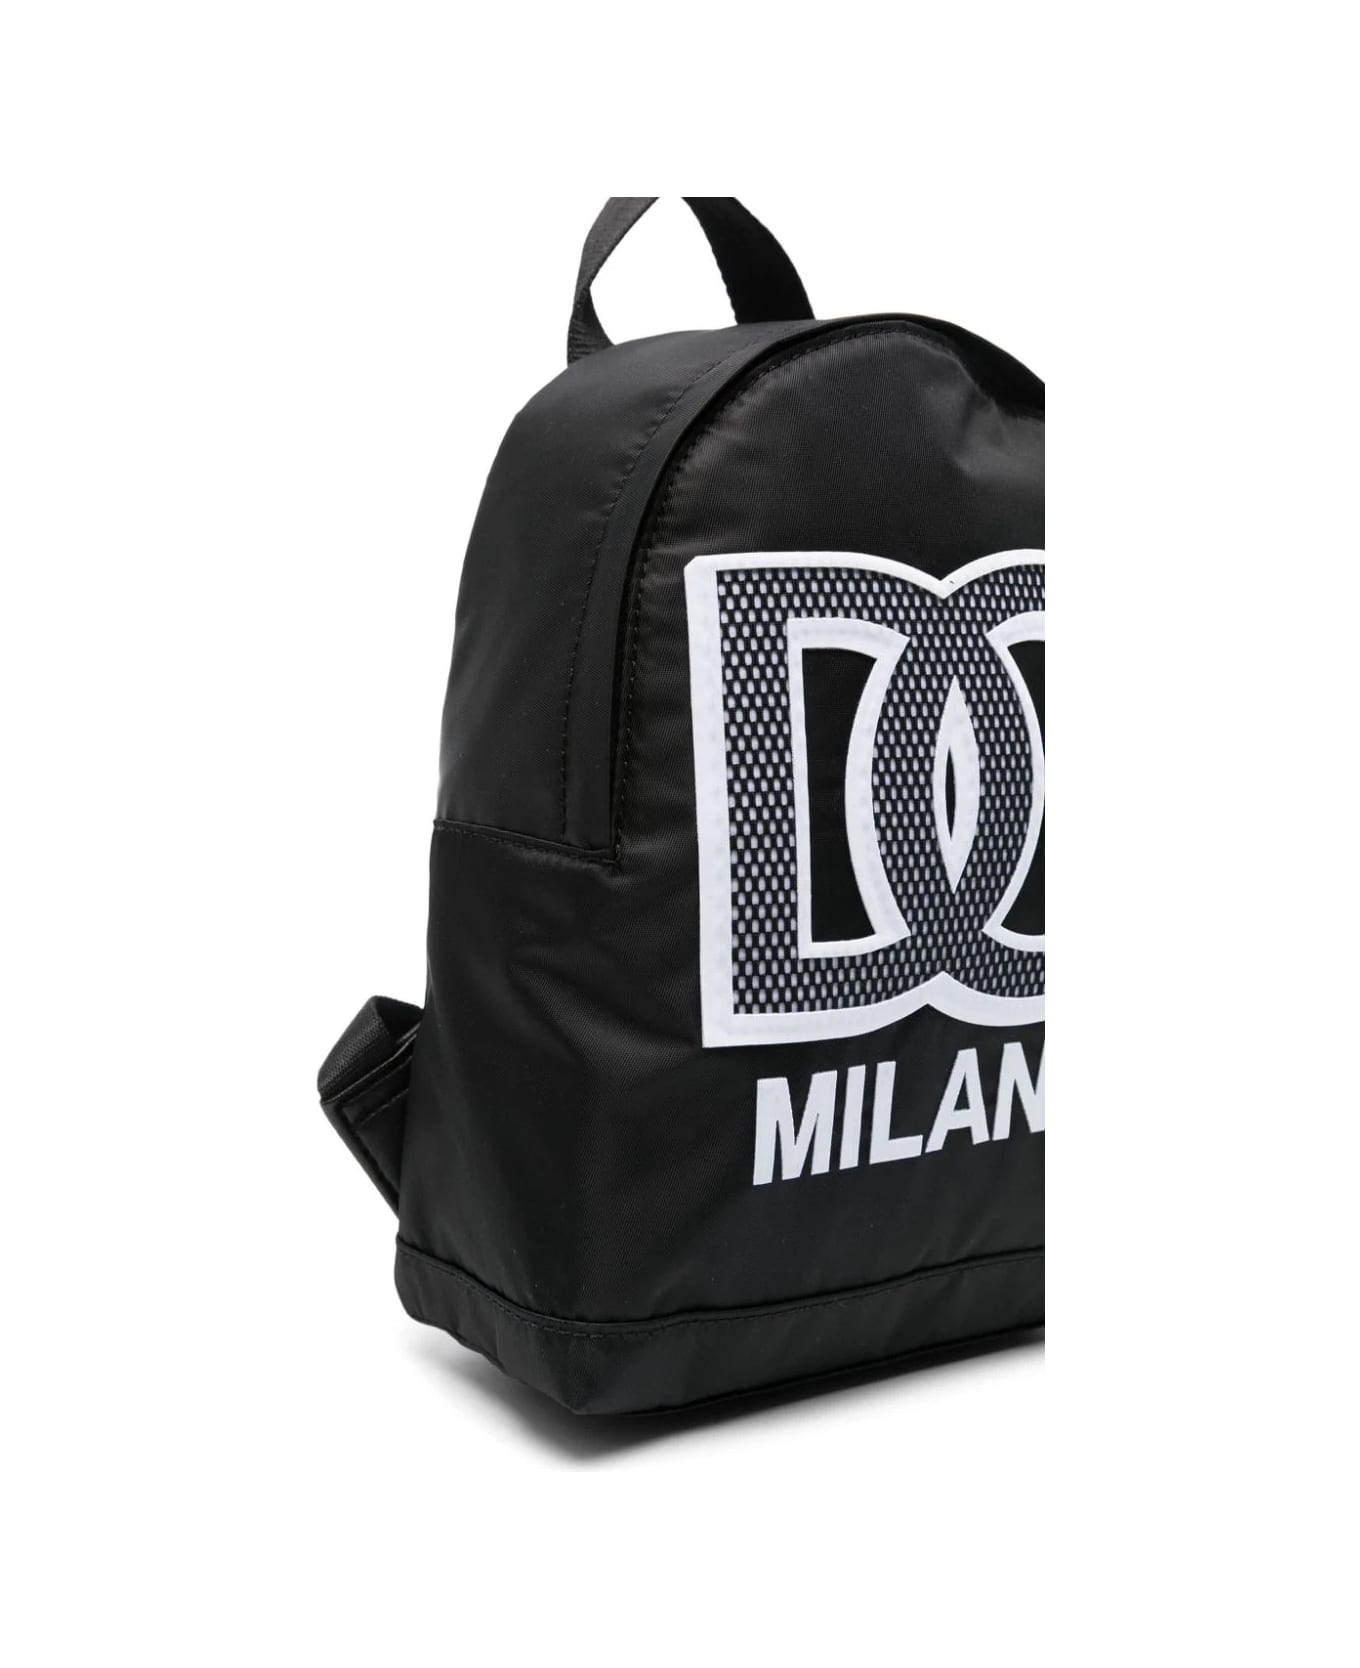 Dolce & Gabbana Black Nylon Backpack With Dg Logo - Nero